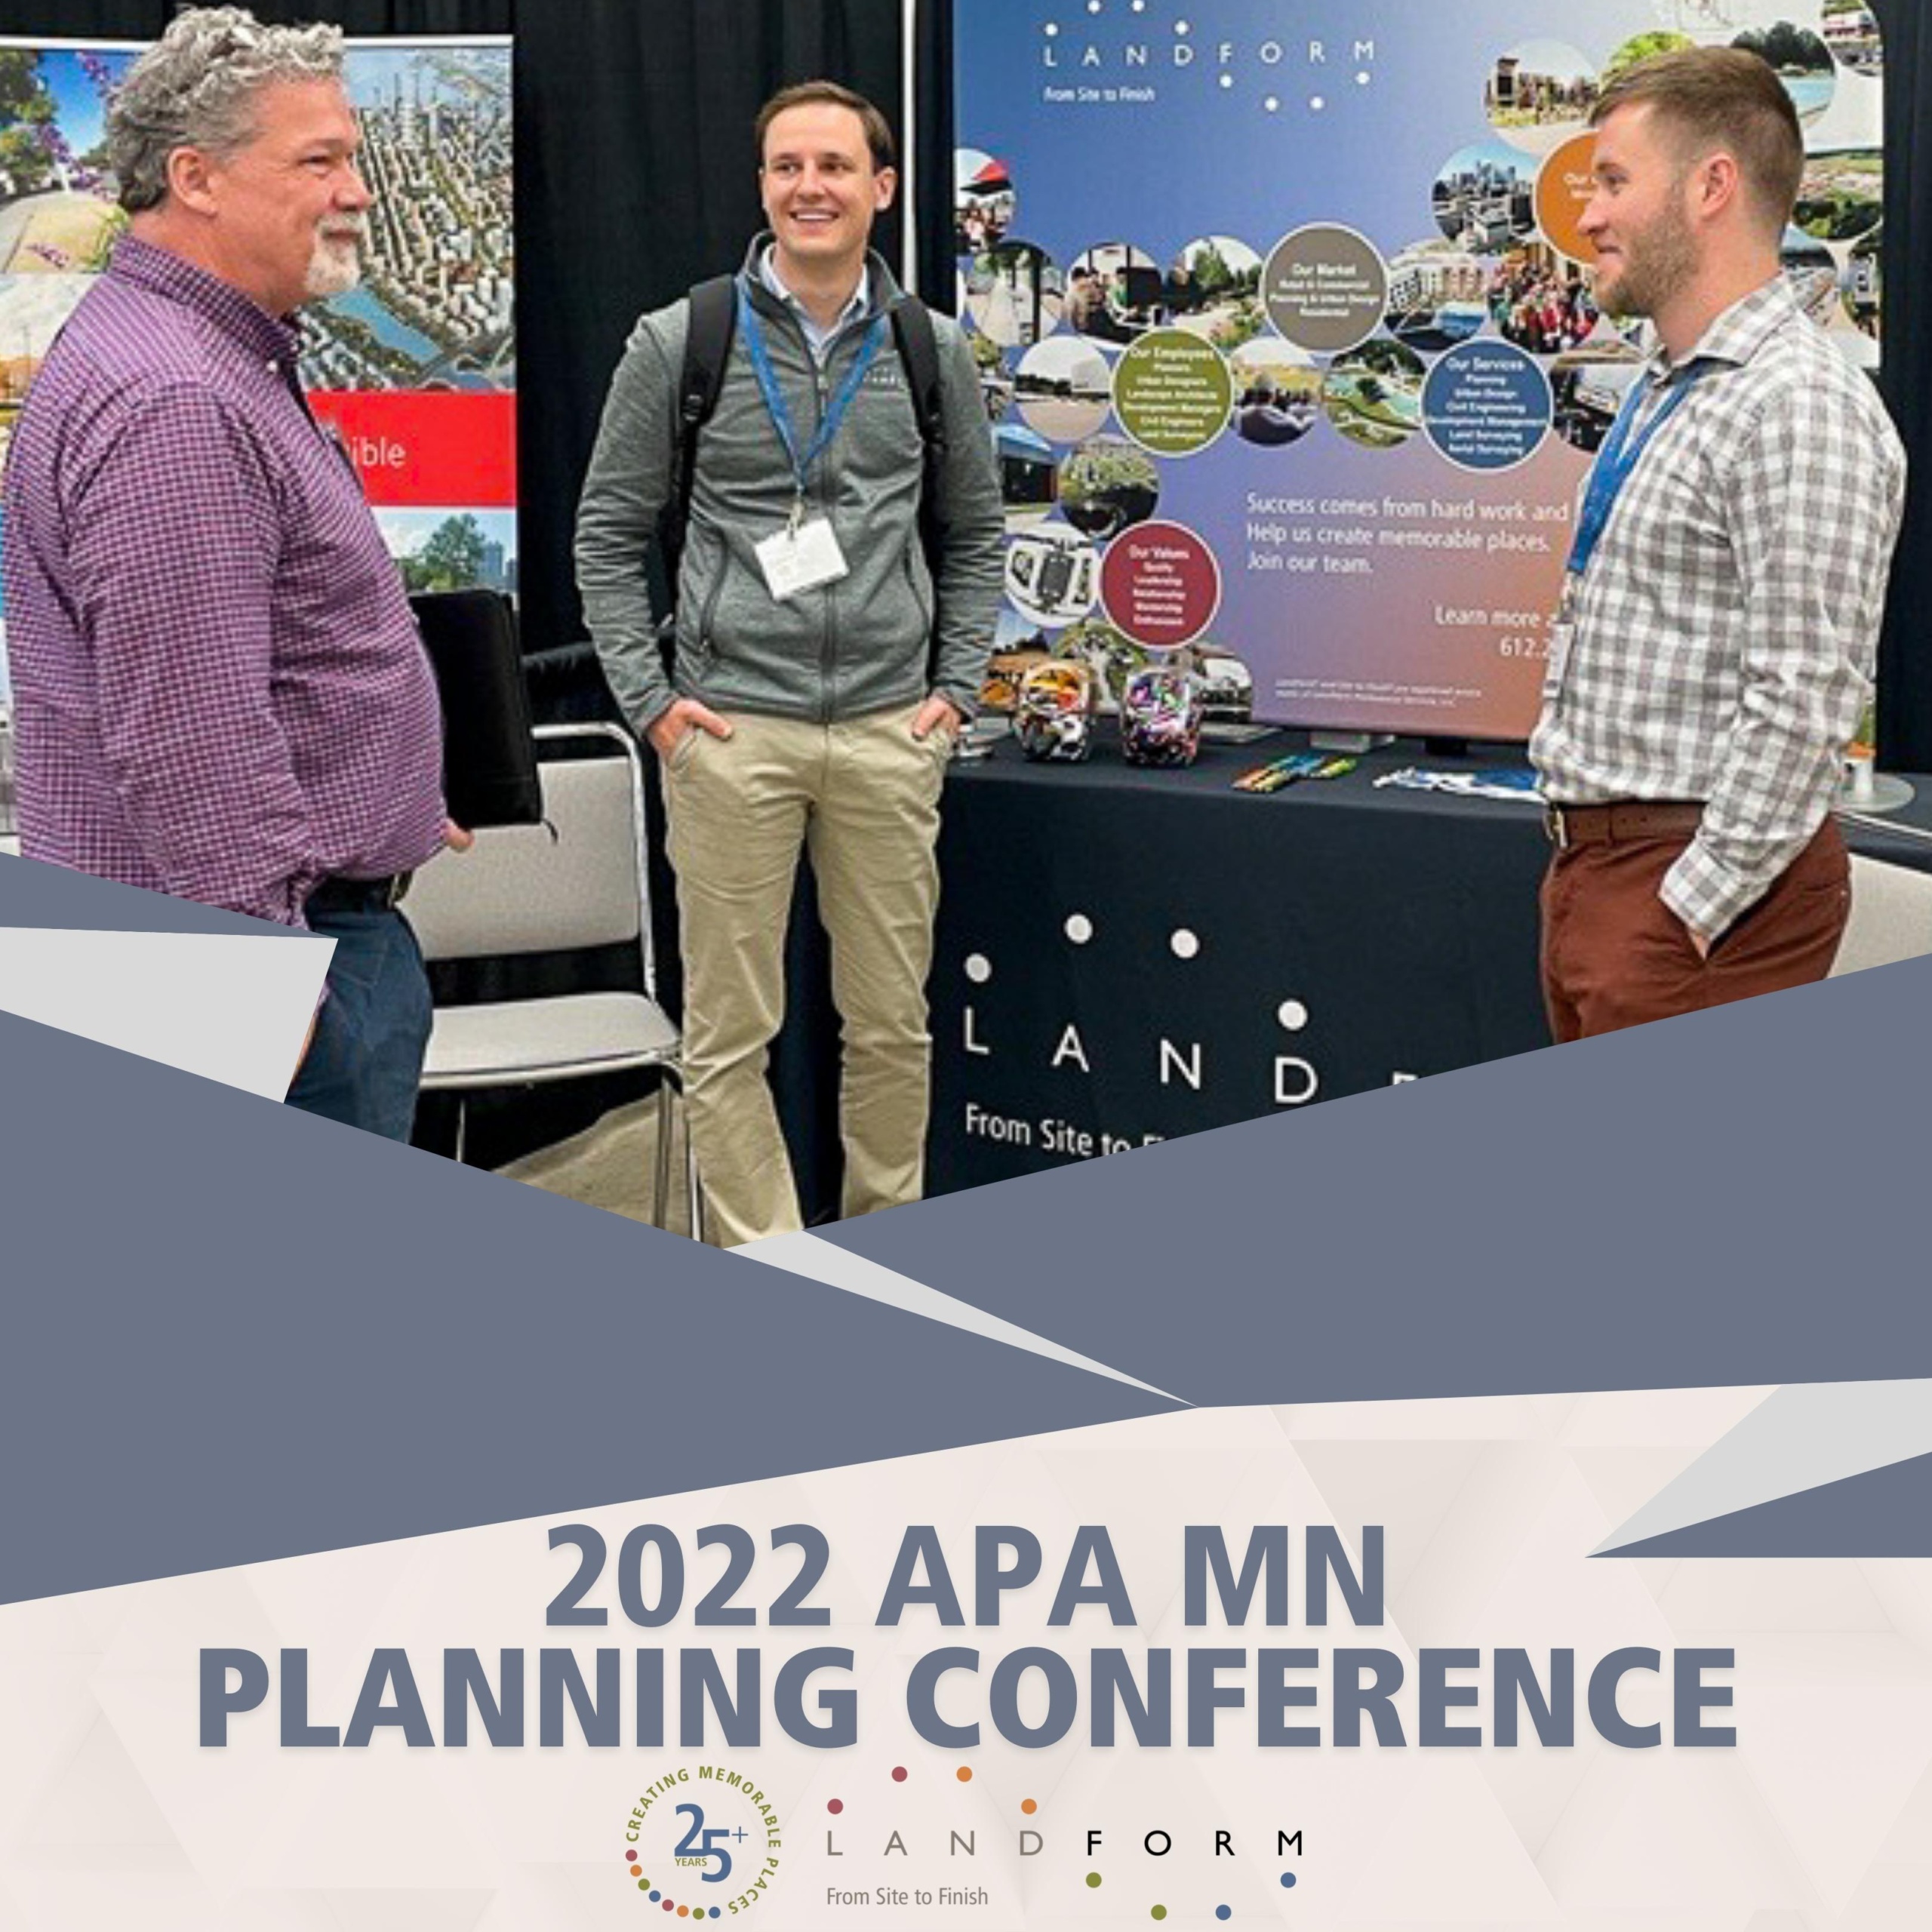 2022 APA MN Conference Landform Professional Services, LLC